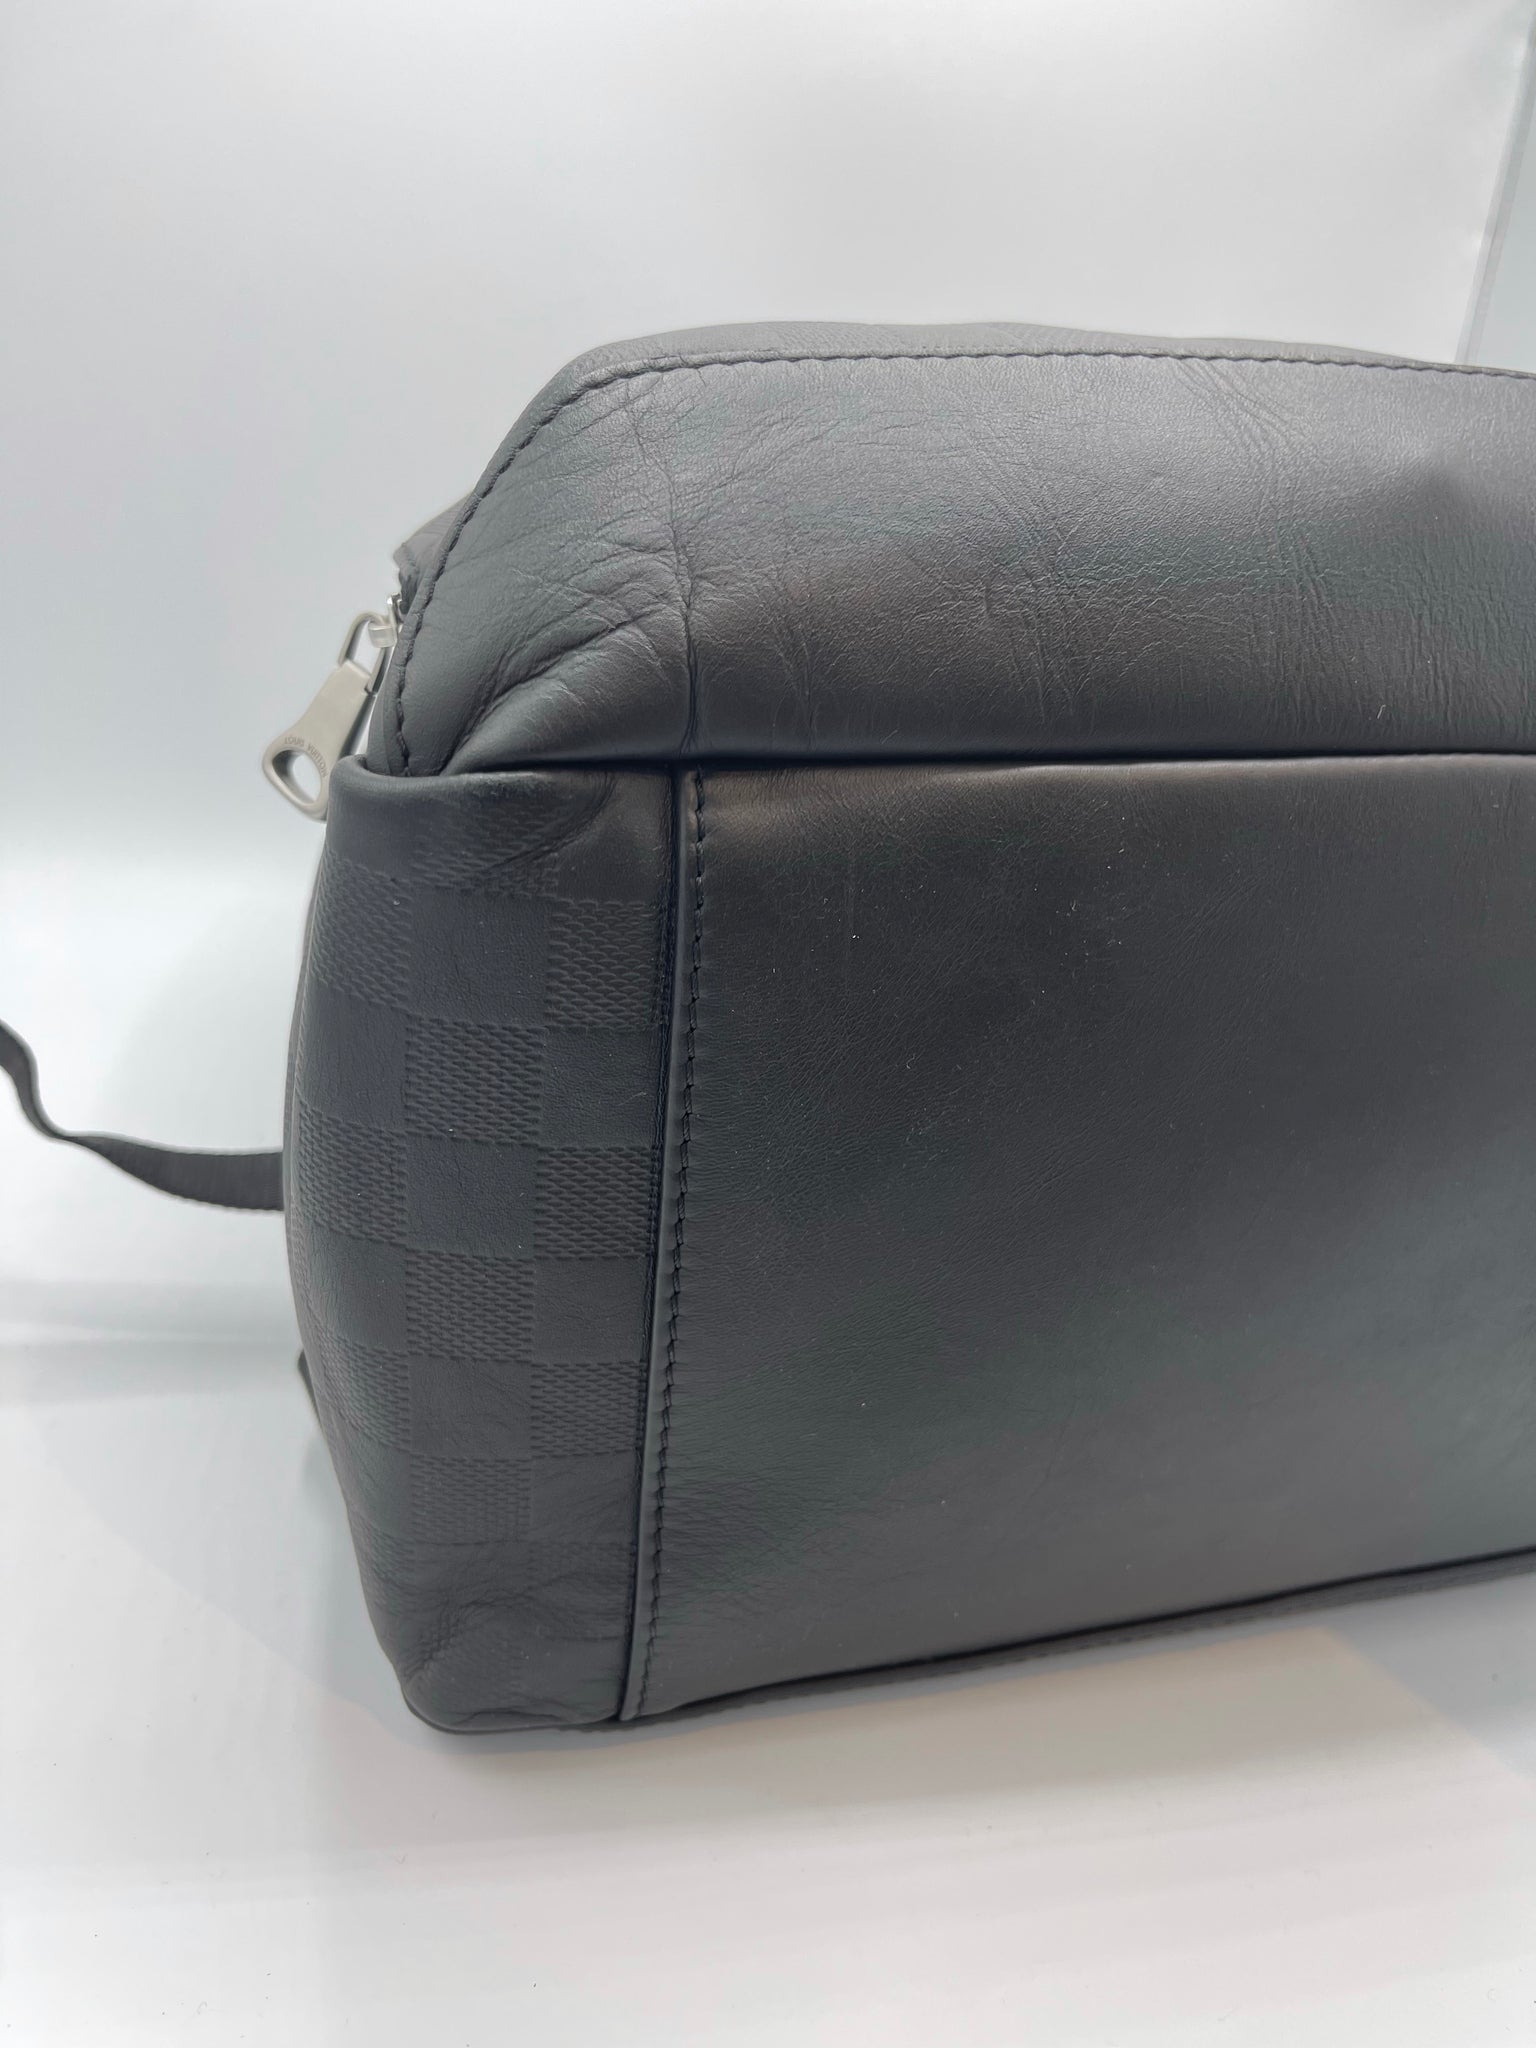 Louis Vuitton Backpack Onyx Damier Infini Embossed Black - US